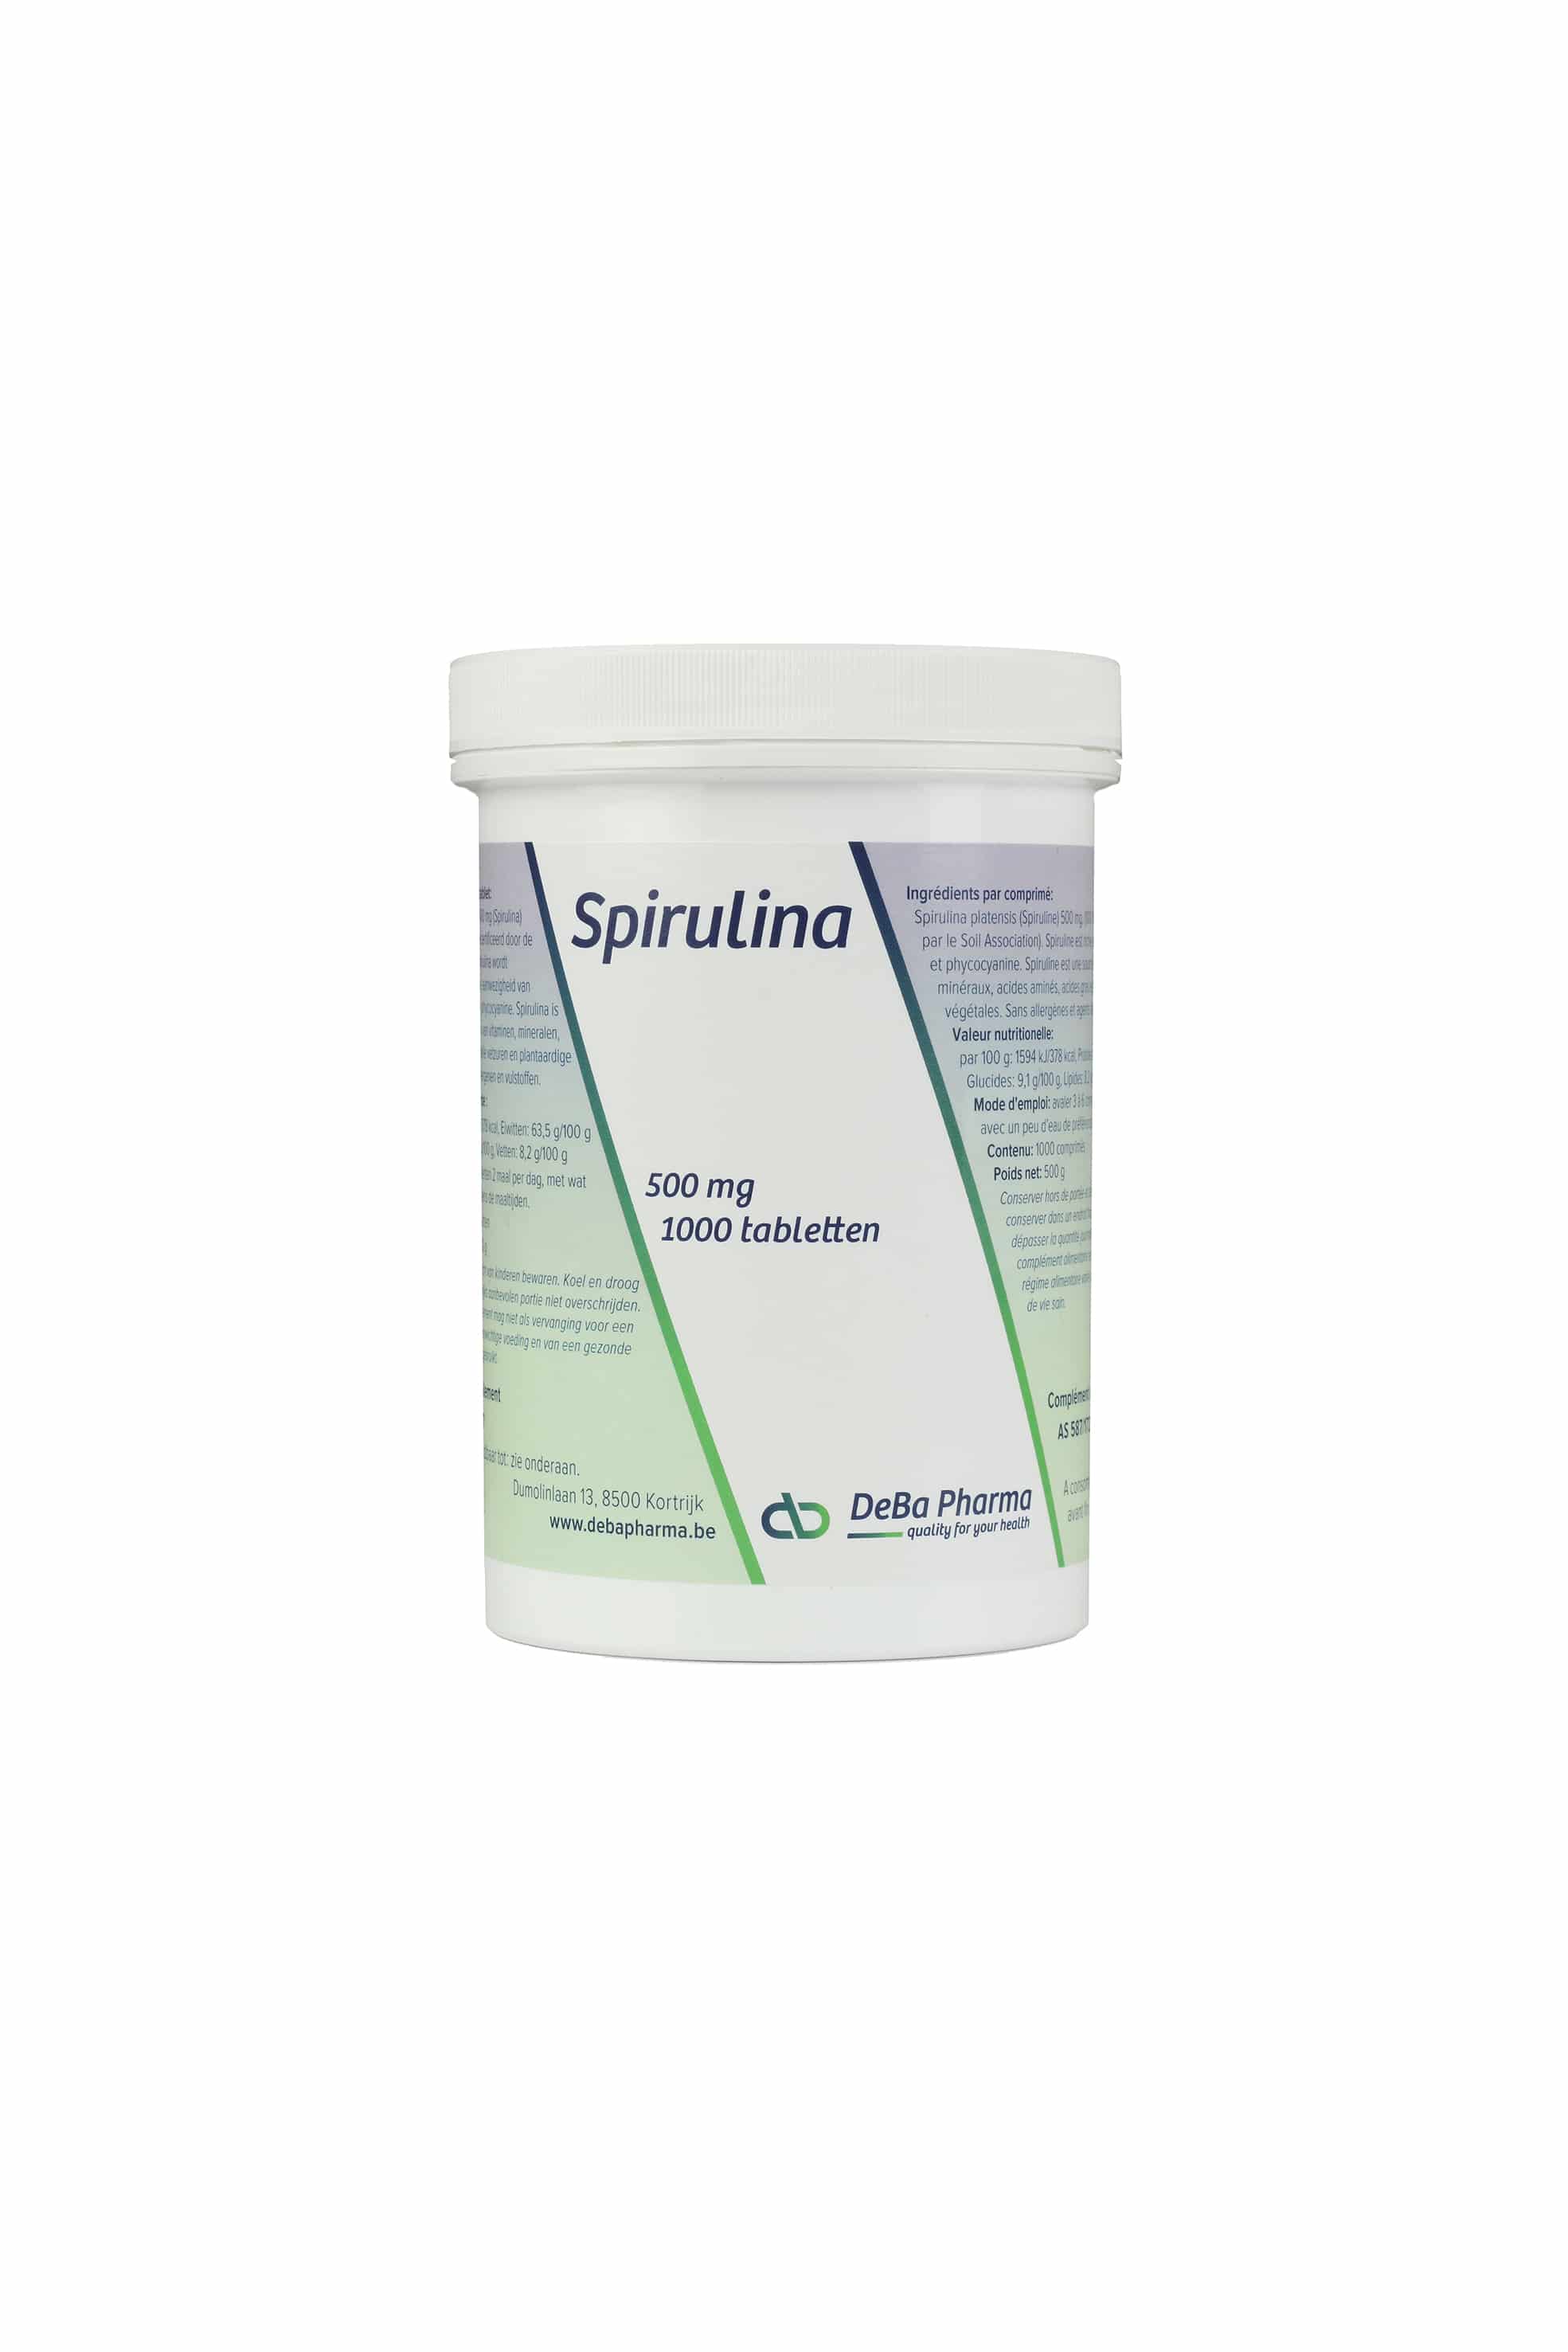 Deba Spirulina 500 mg